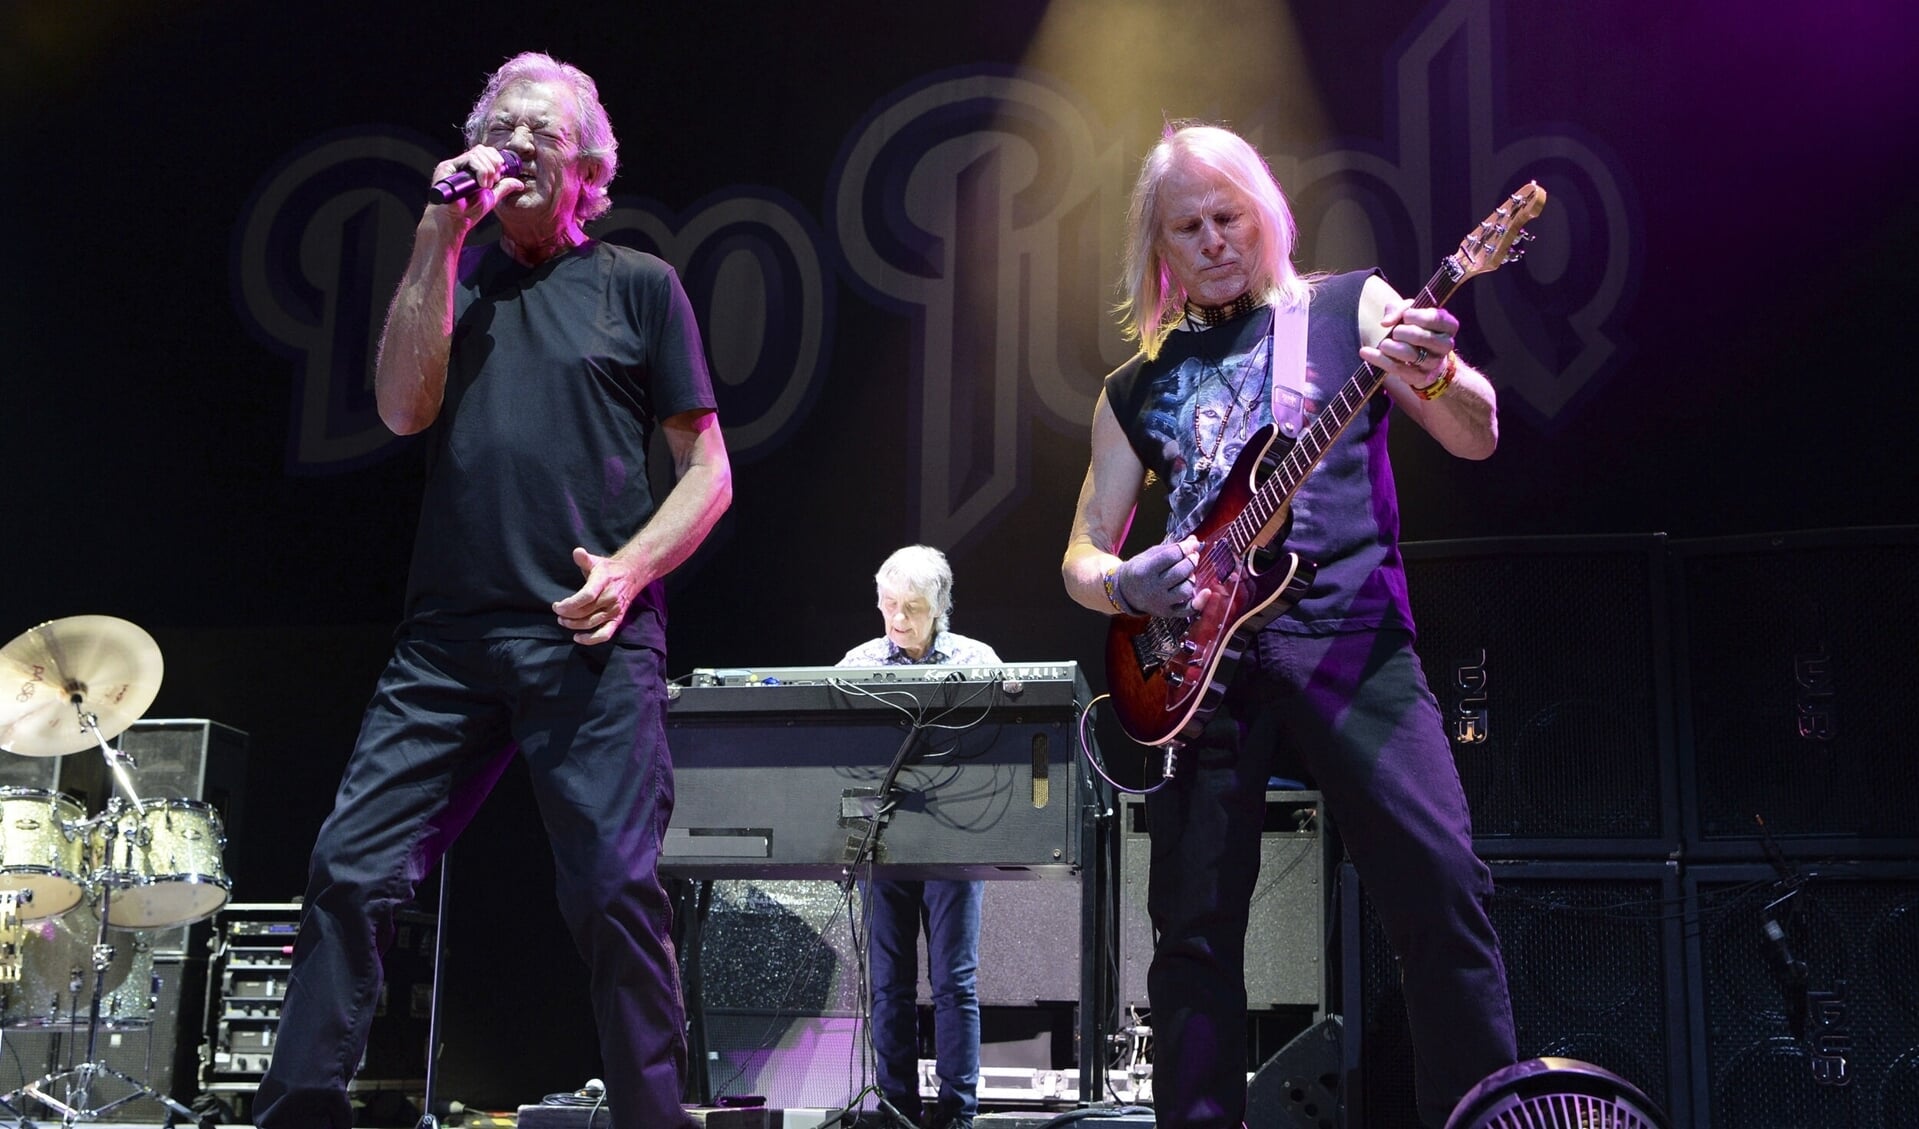 Den 77-årige forsanger Ian Gillan kommer med sit verdenskendte band Deep Purple og spiller i Tivoli til Fredagsrock. Foto: